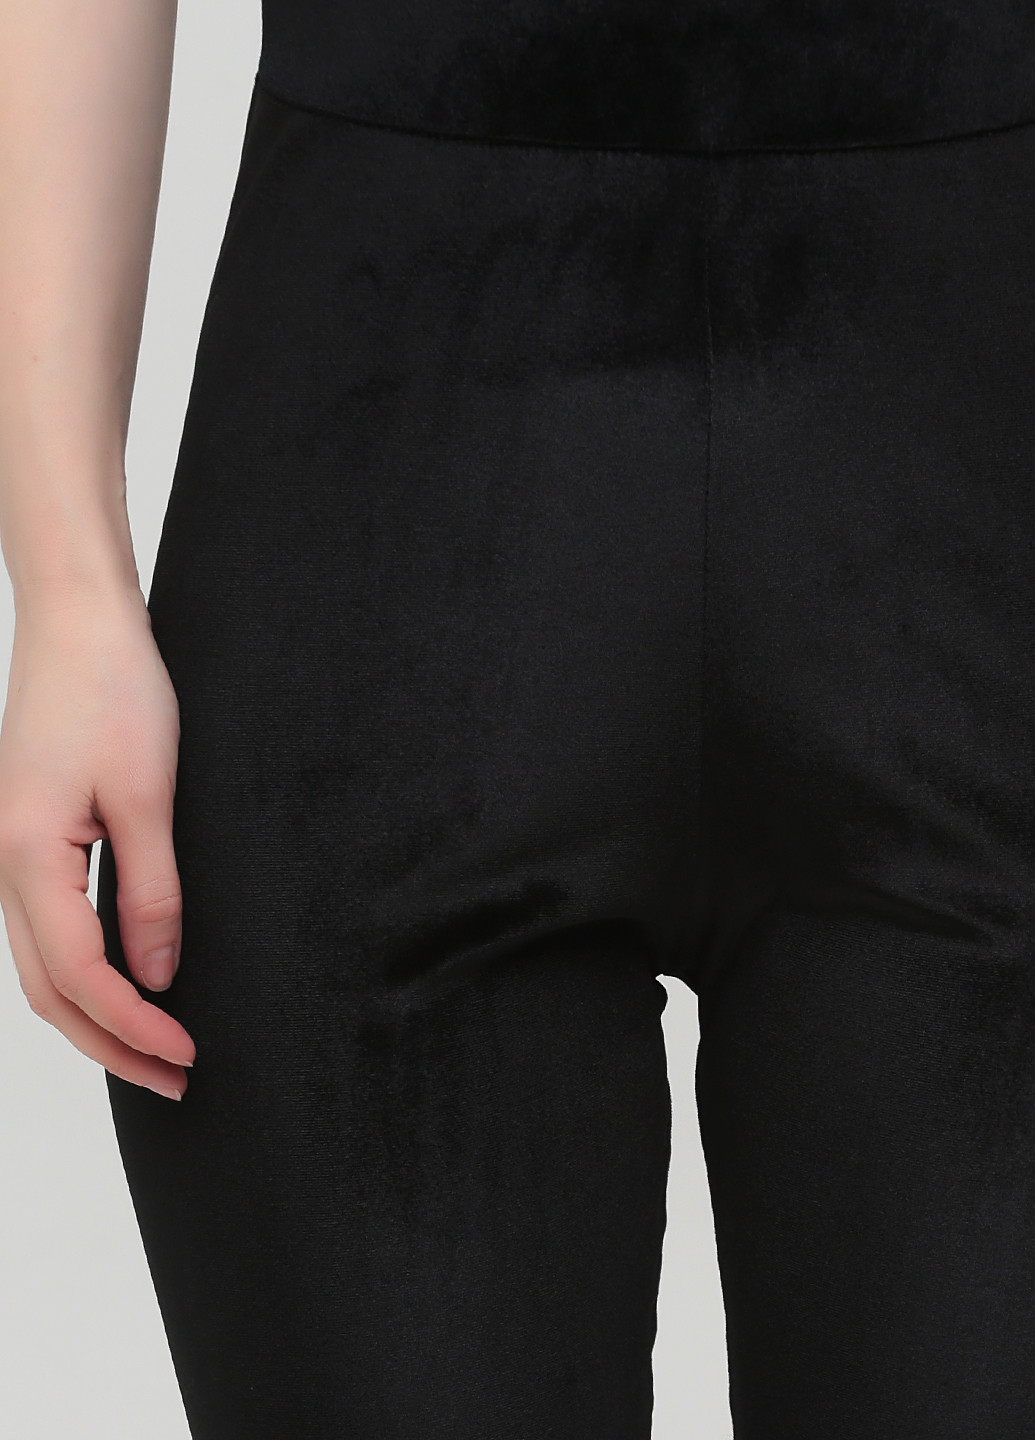 Комбинезон PrettyLittleThing комбинезон-брюки однотонный чёрный кэжуал велюр, полиэстер